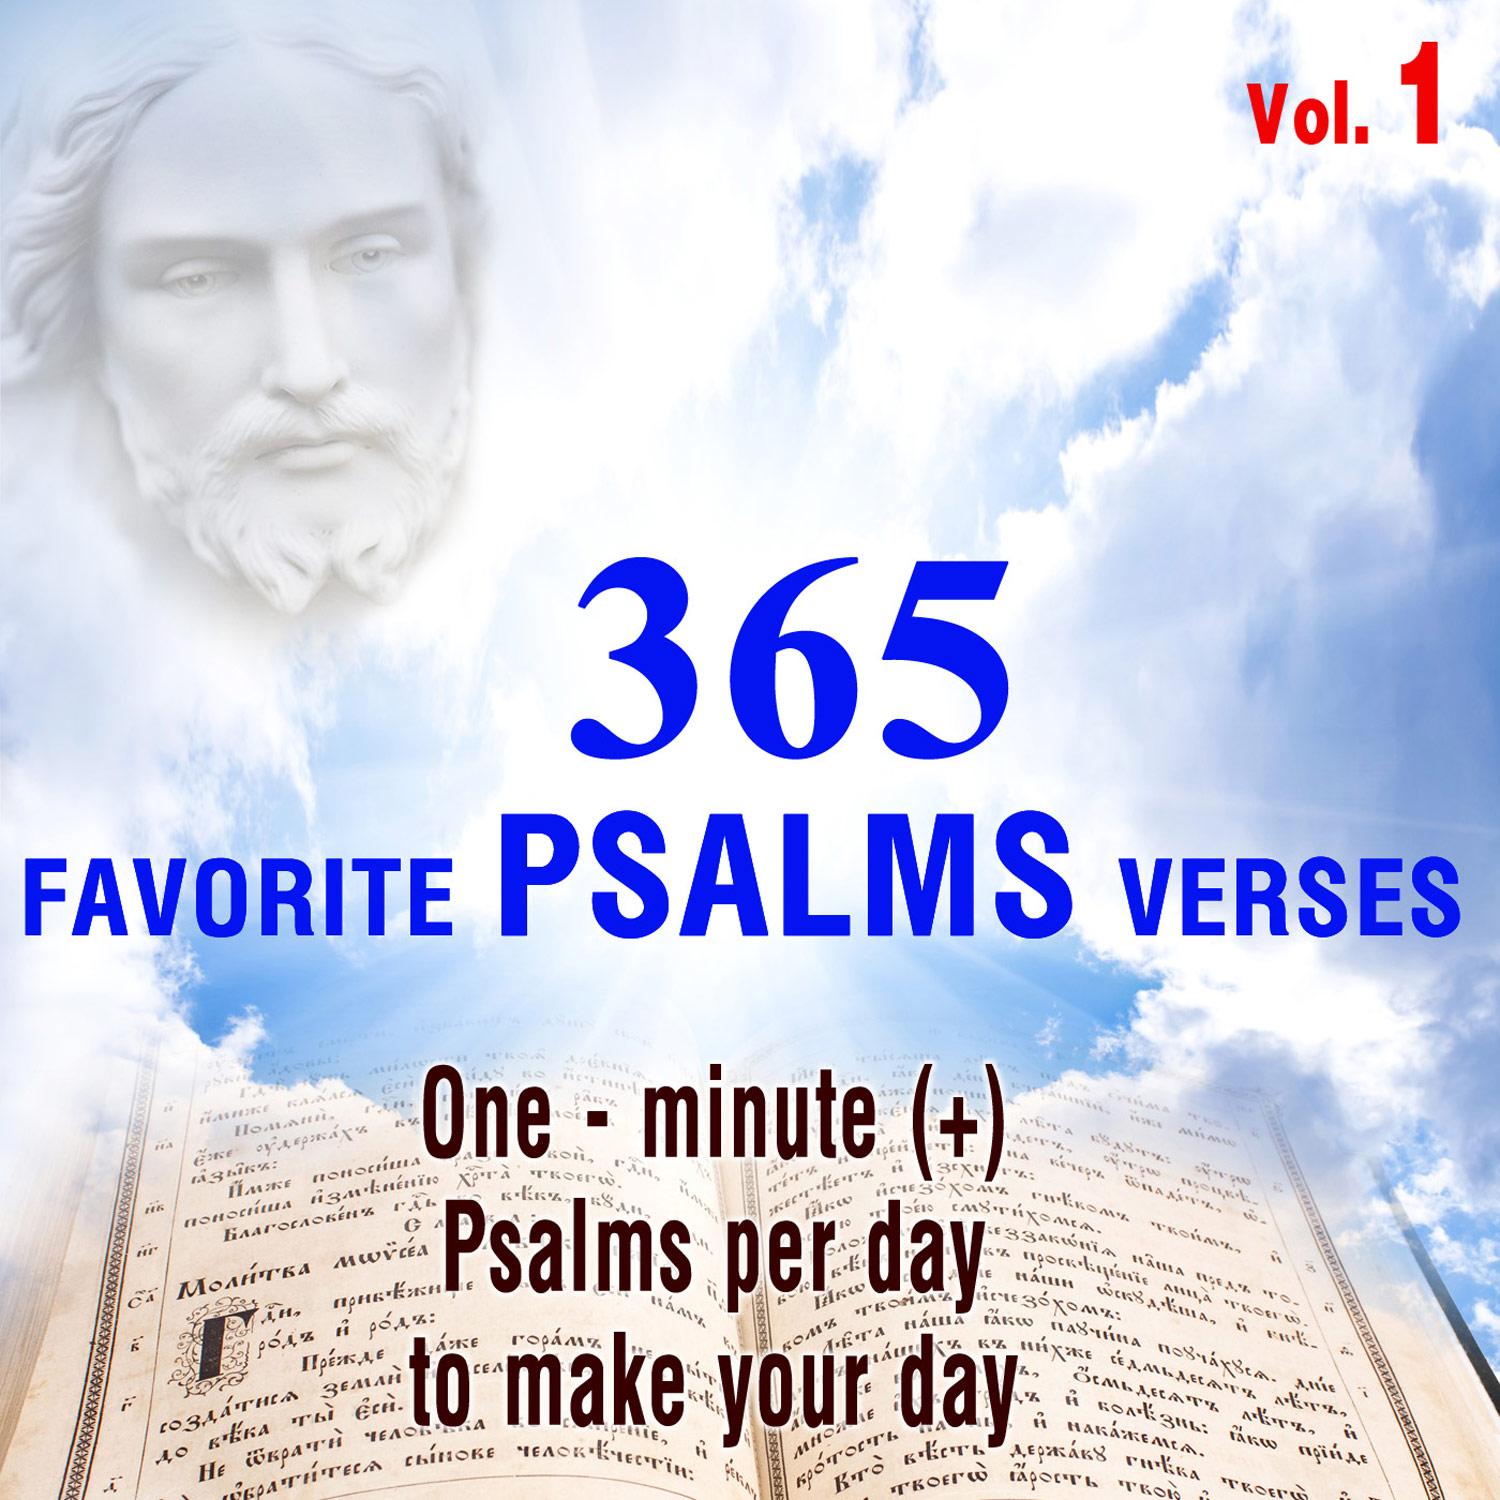 Psalms No. 103